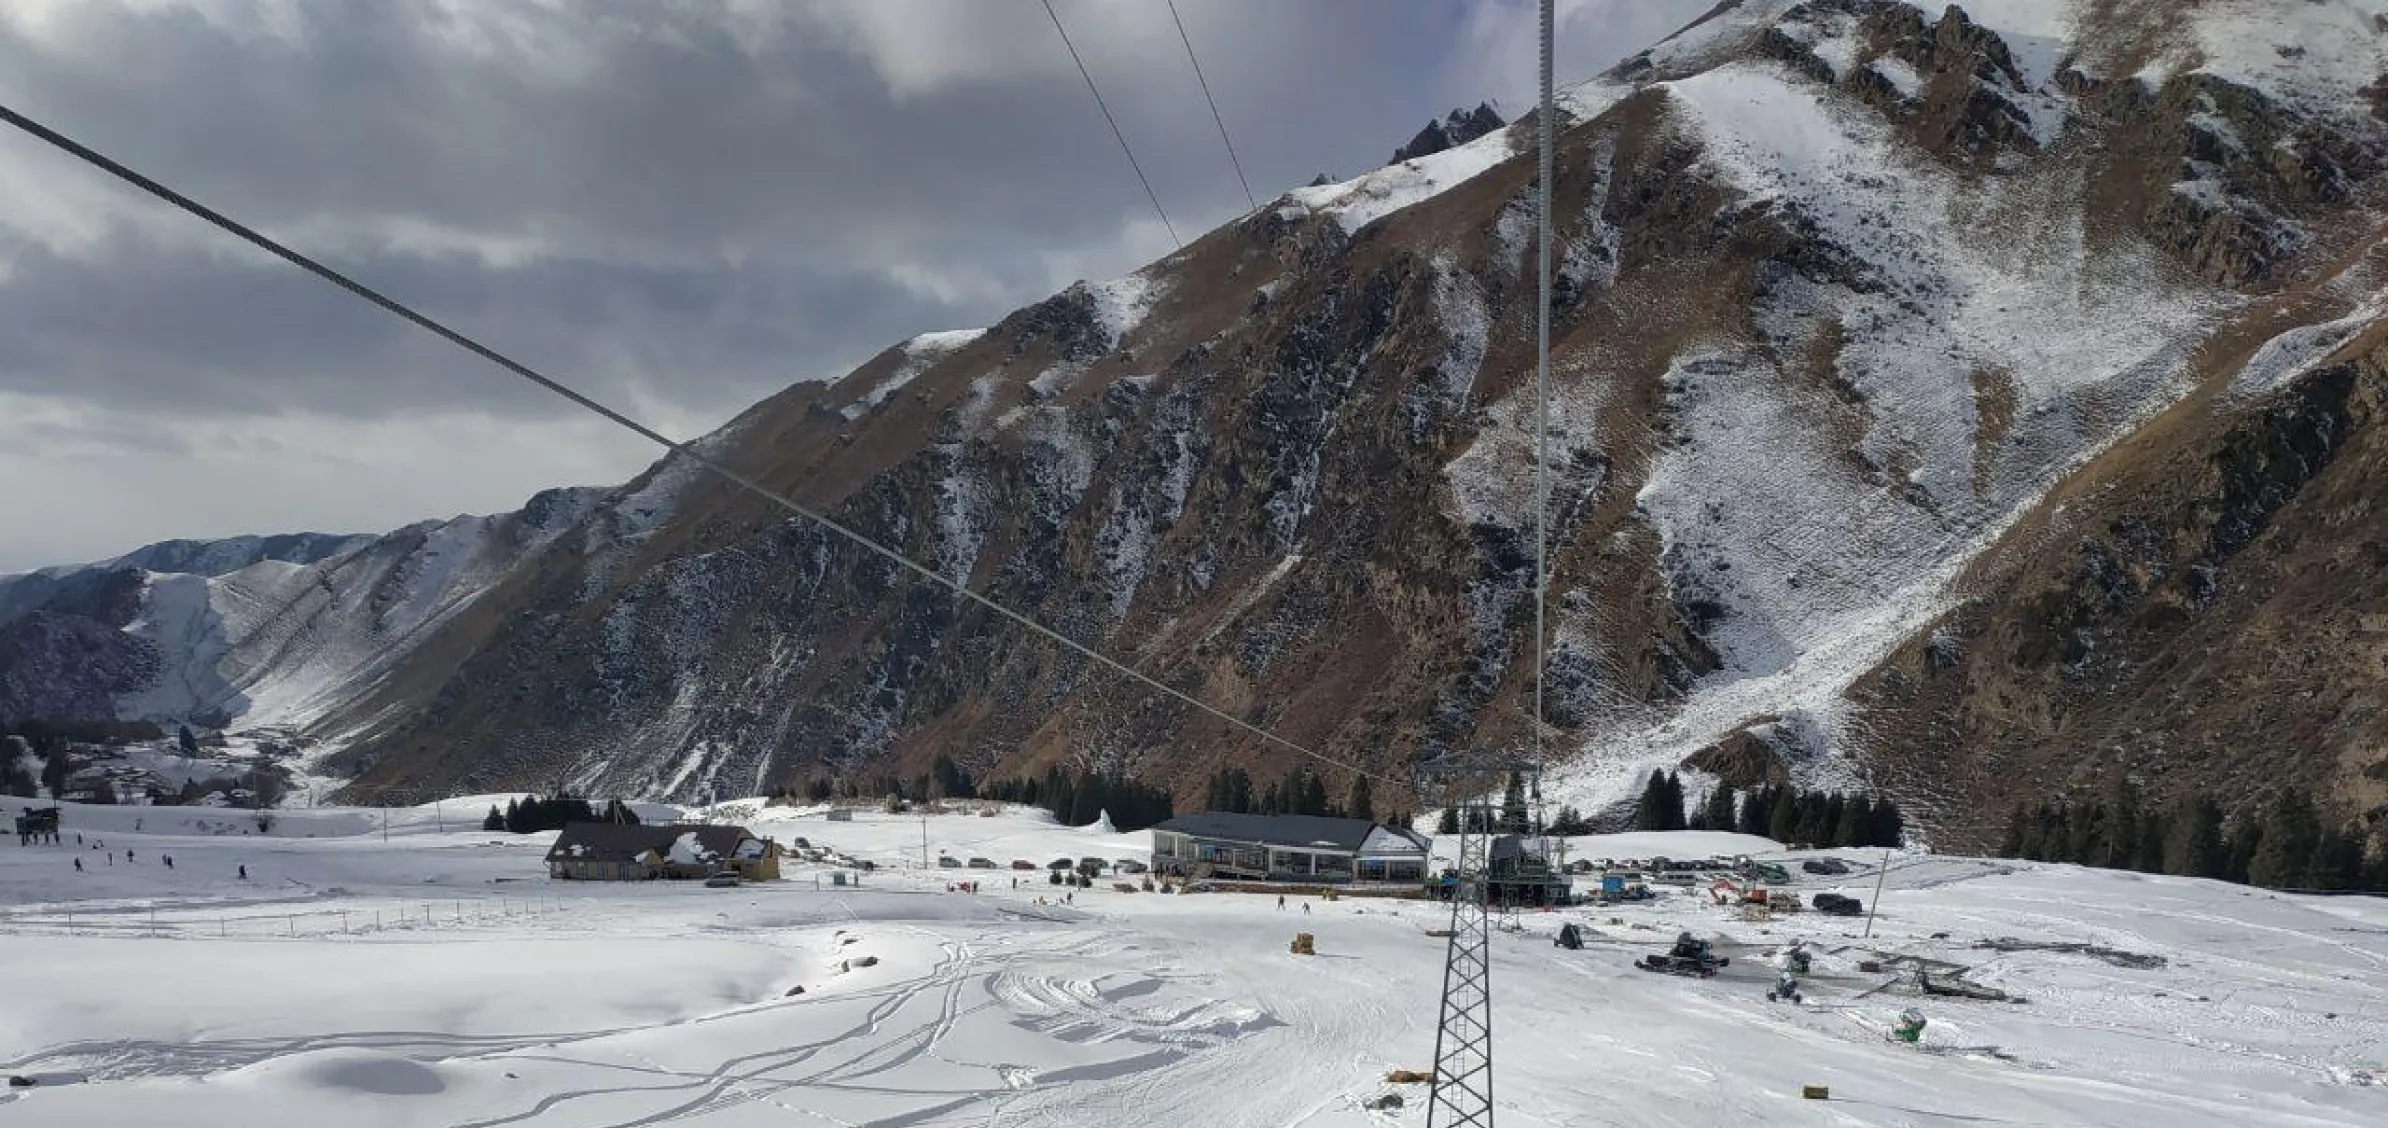 Ak-Tuz ski resort